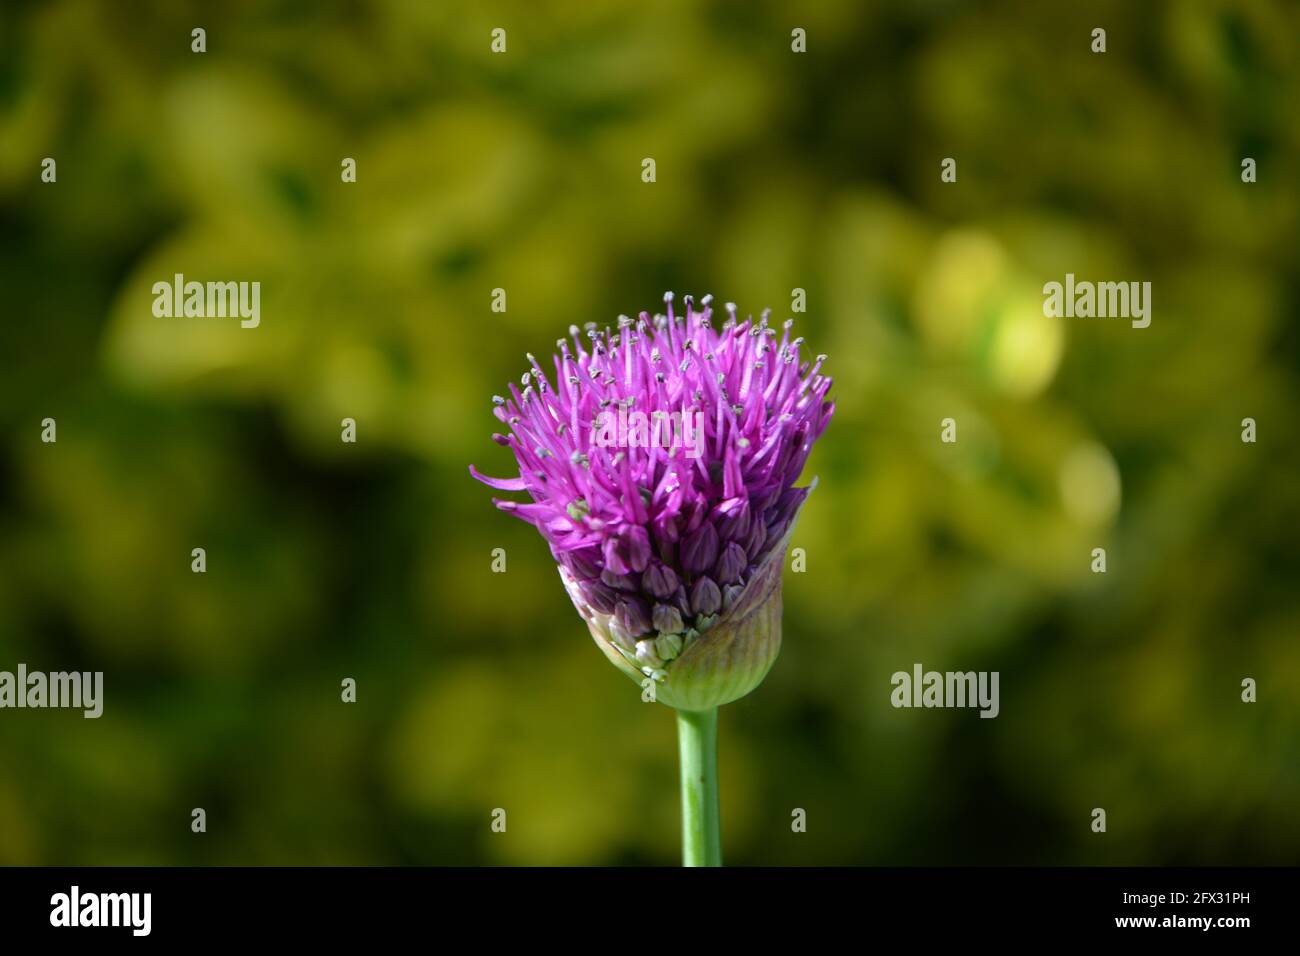 Allium Gladiator, Magic Broomstick, Cambridge UK, purely beautiful and peaceful floral space Stock Photo